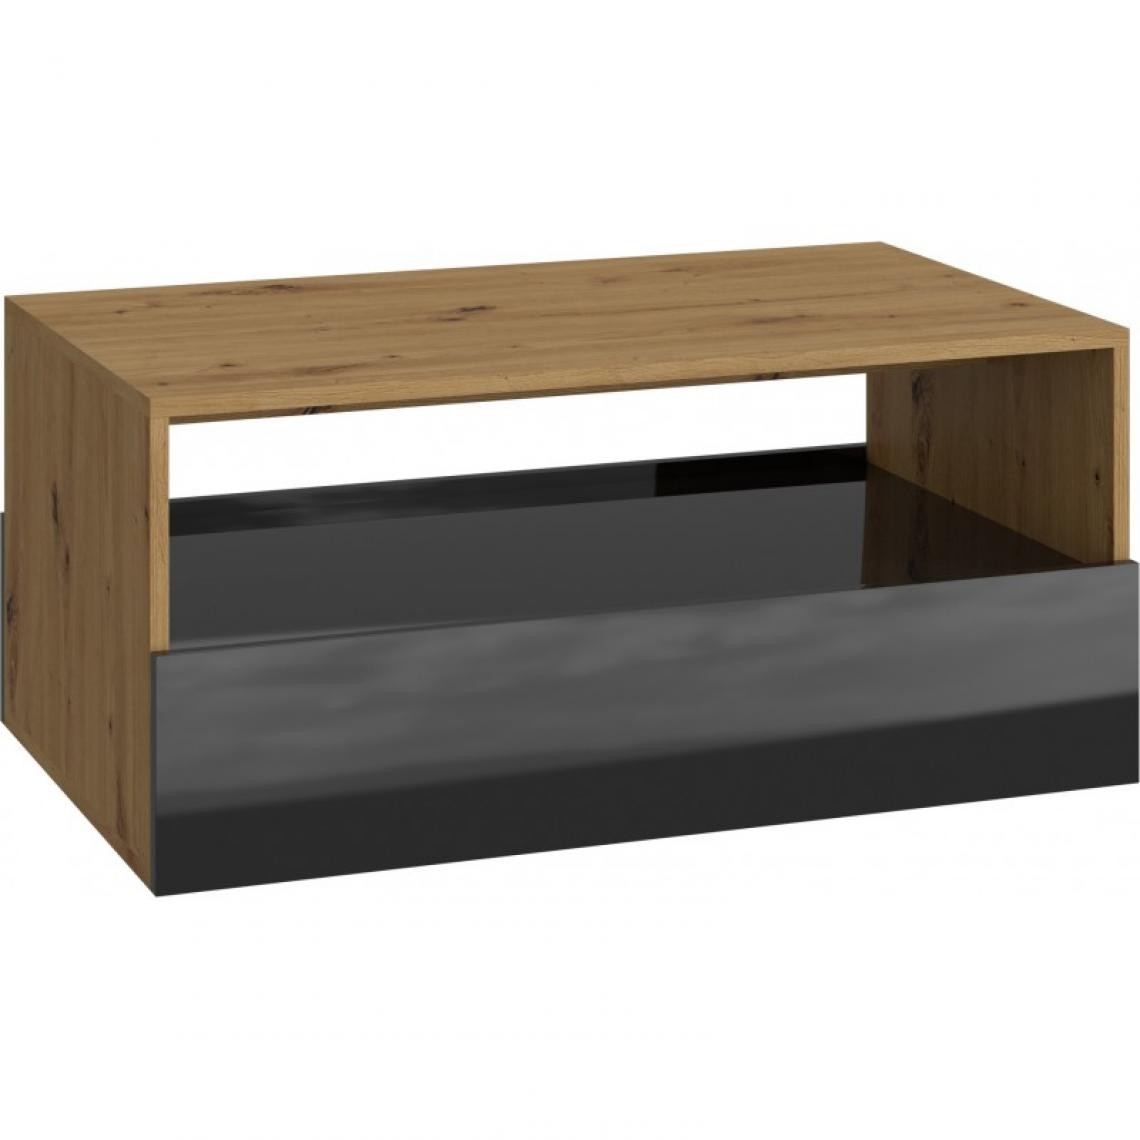 Hucoco - JANNA - Table basse rectangualaire style moderne - 40x90x54 cm - 2 tiroirs - Table à café - Finition gloss - Noir - Tables d'appoint